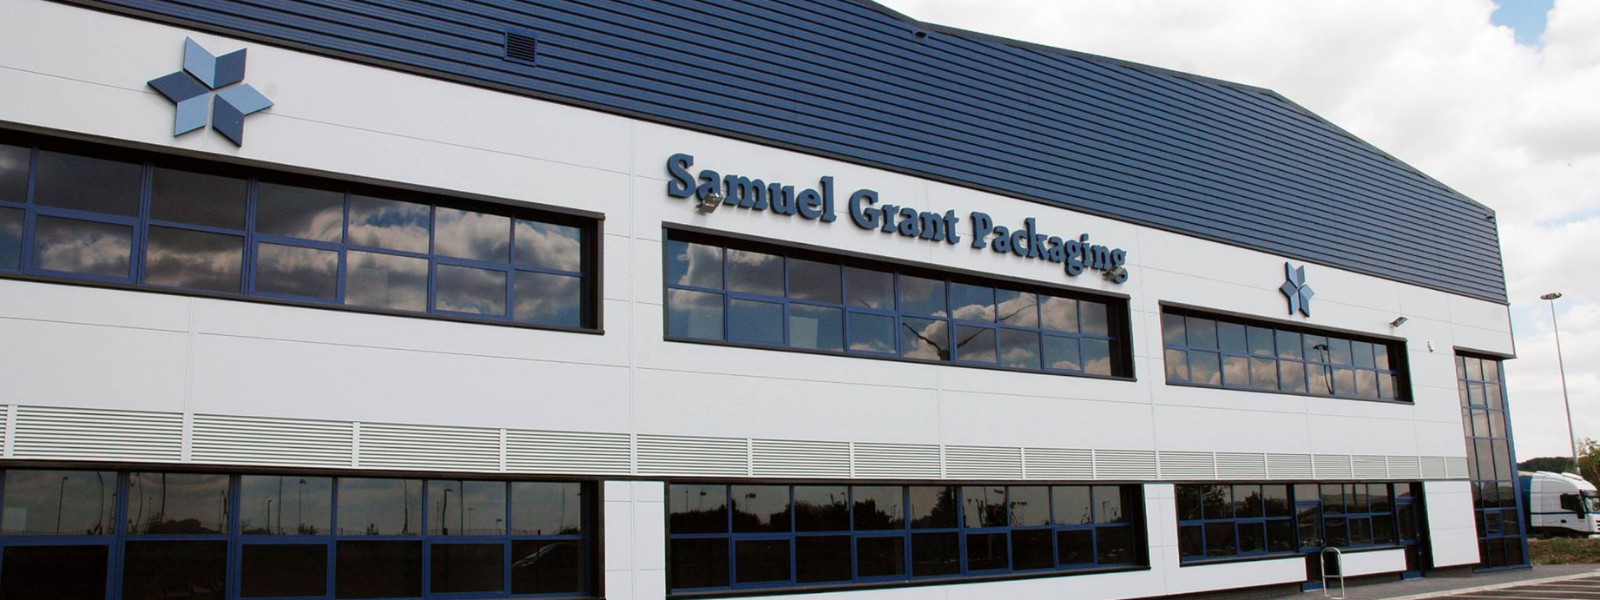 Samuel Grant Packaging joins leading Yorkshire ind...